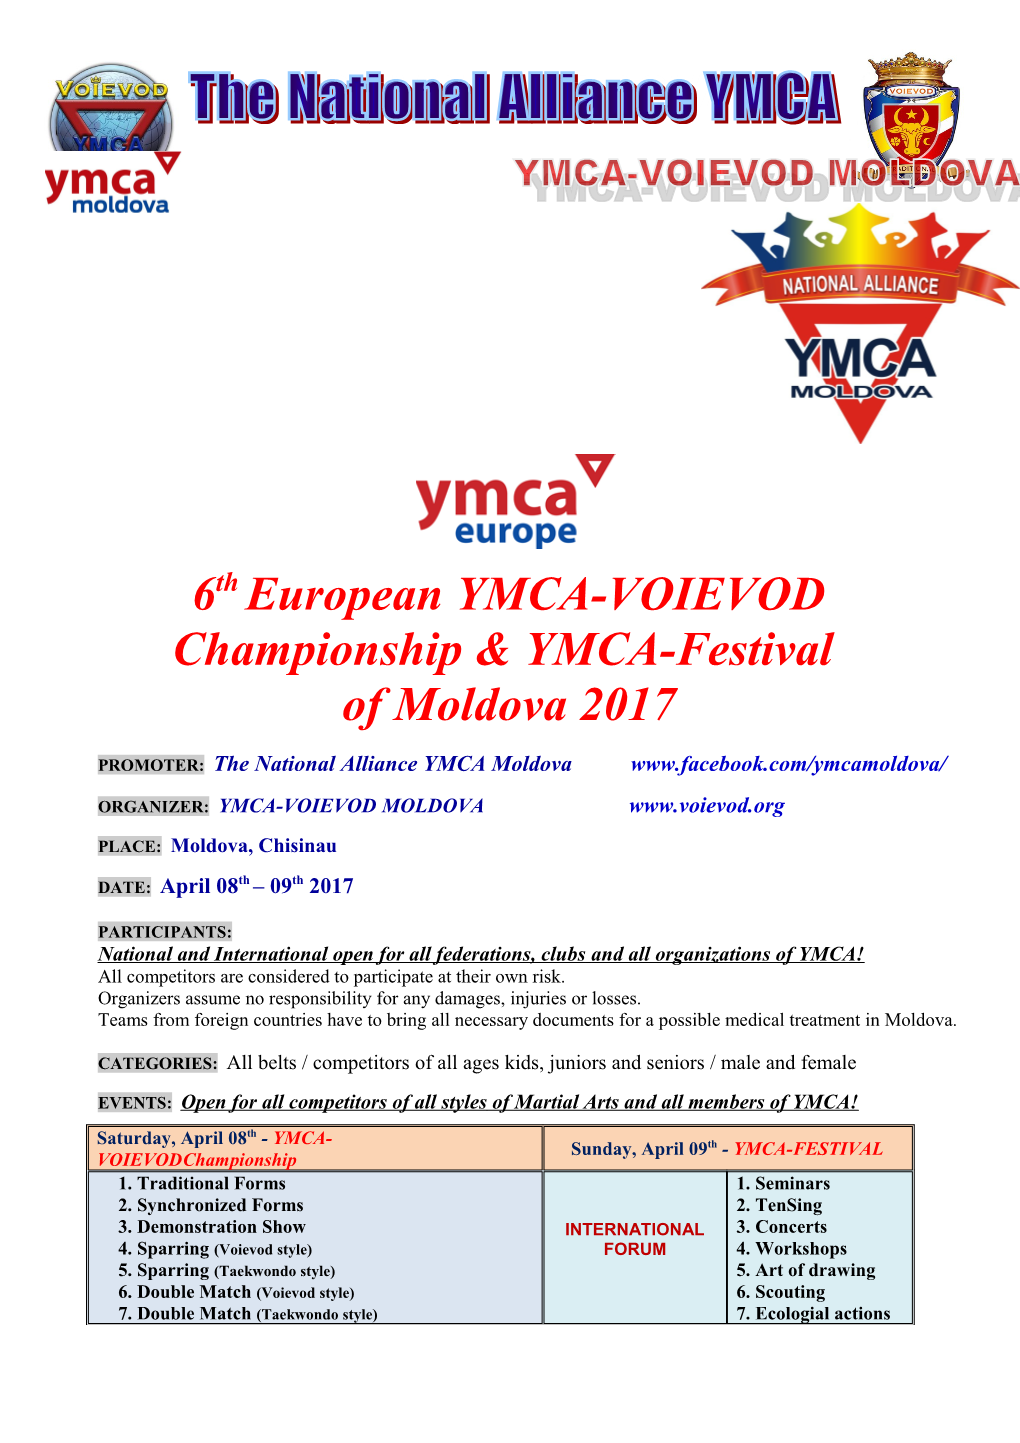 PROMOTER: the National Alliance YMCA Moldova